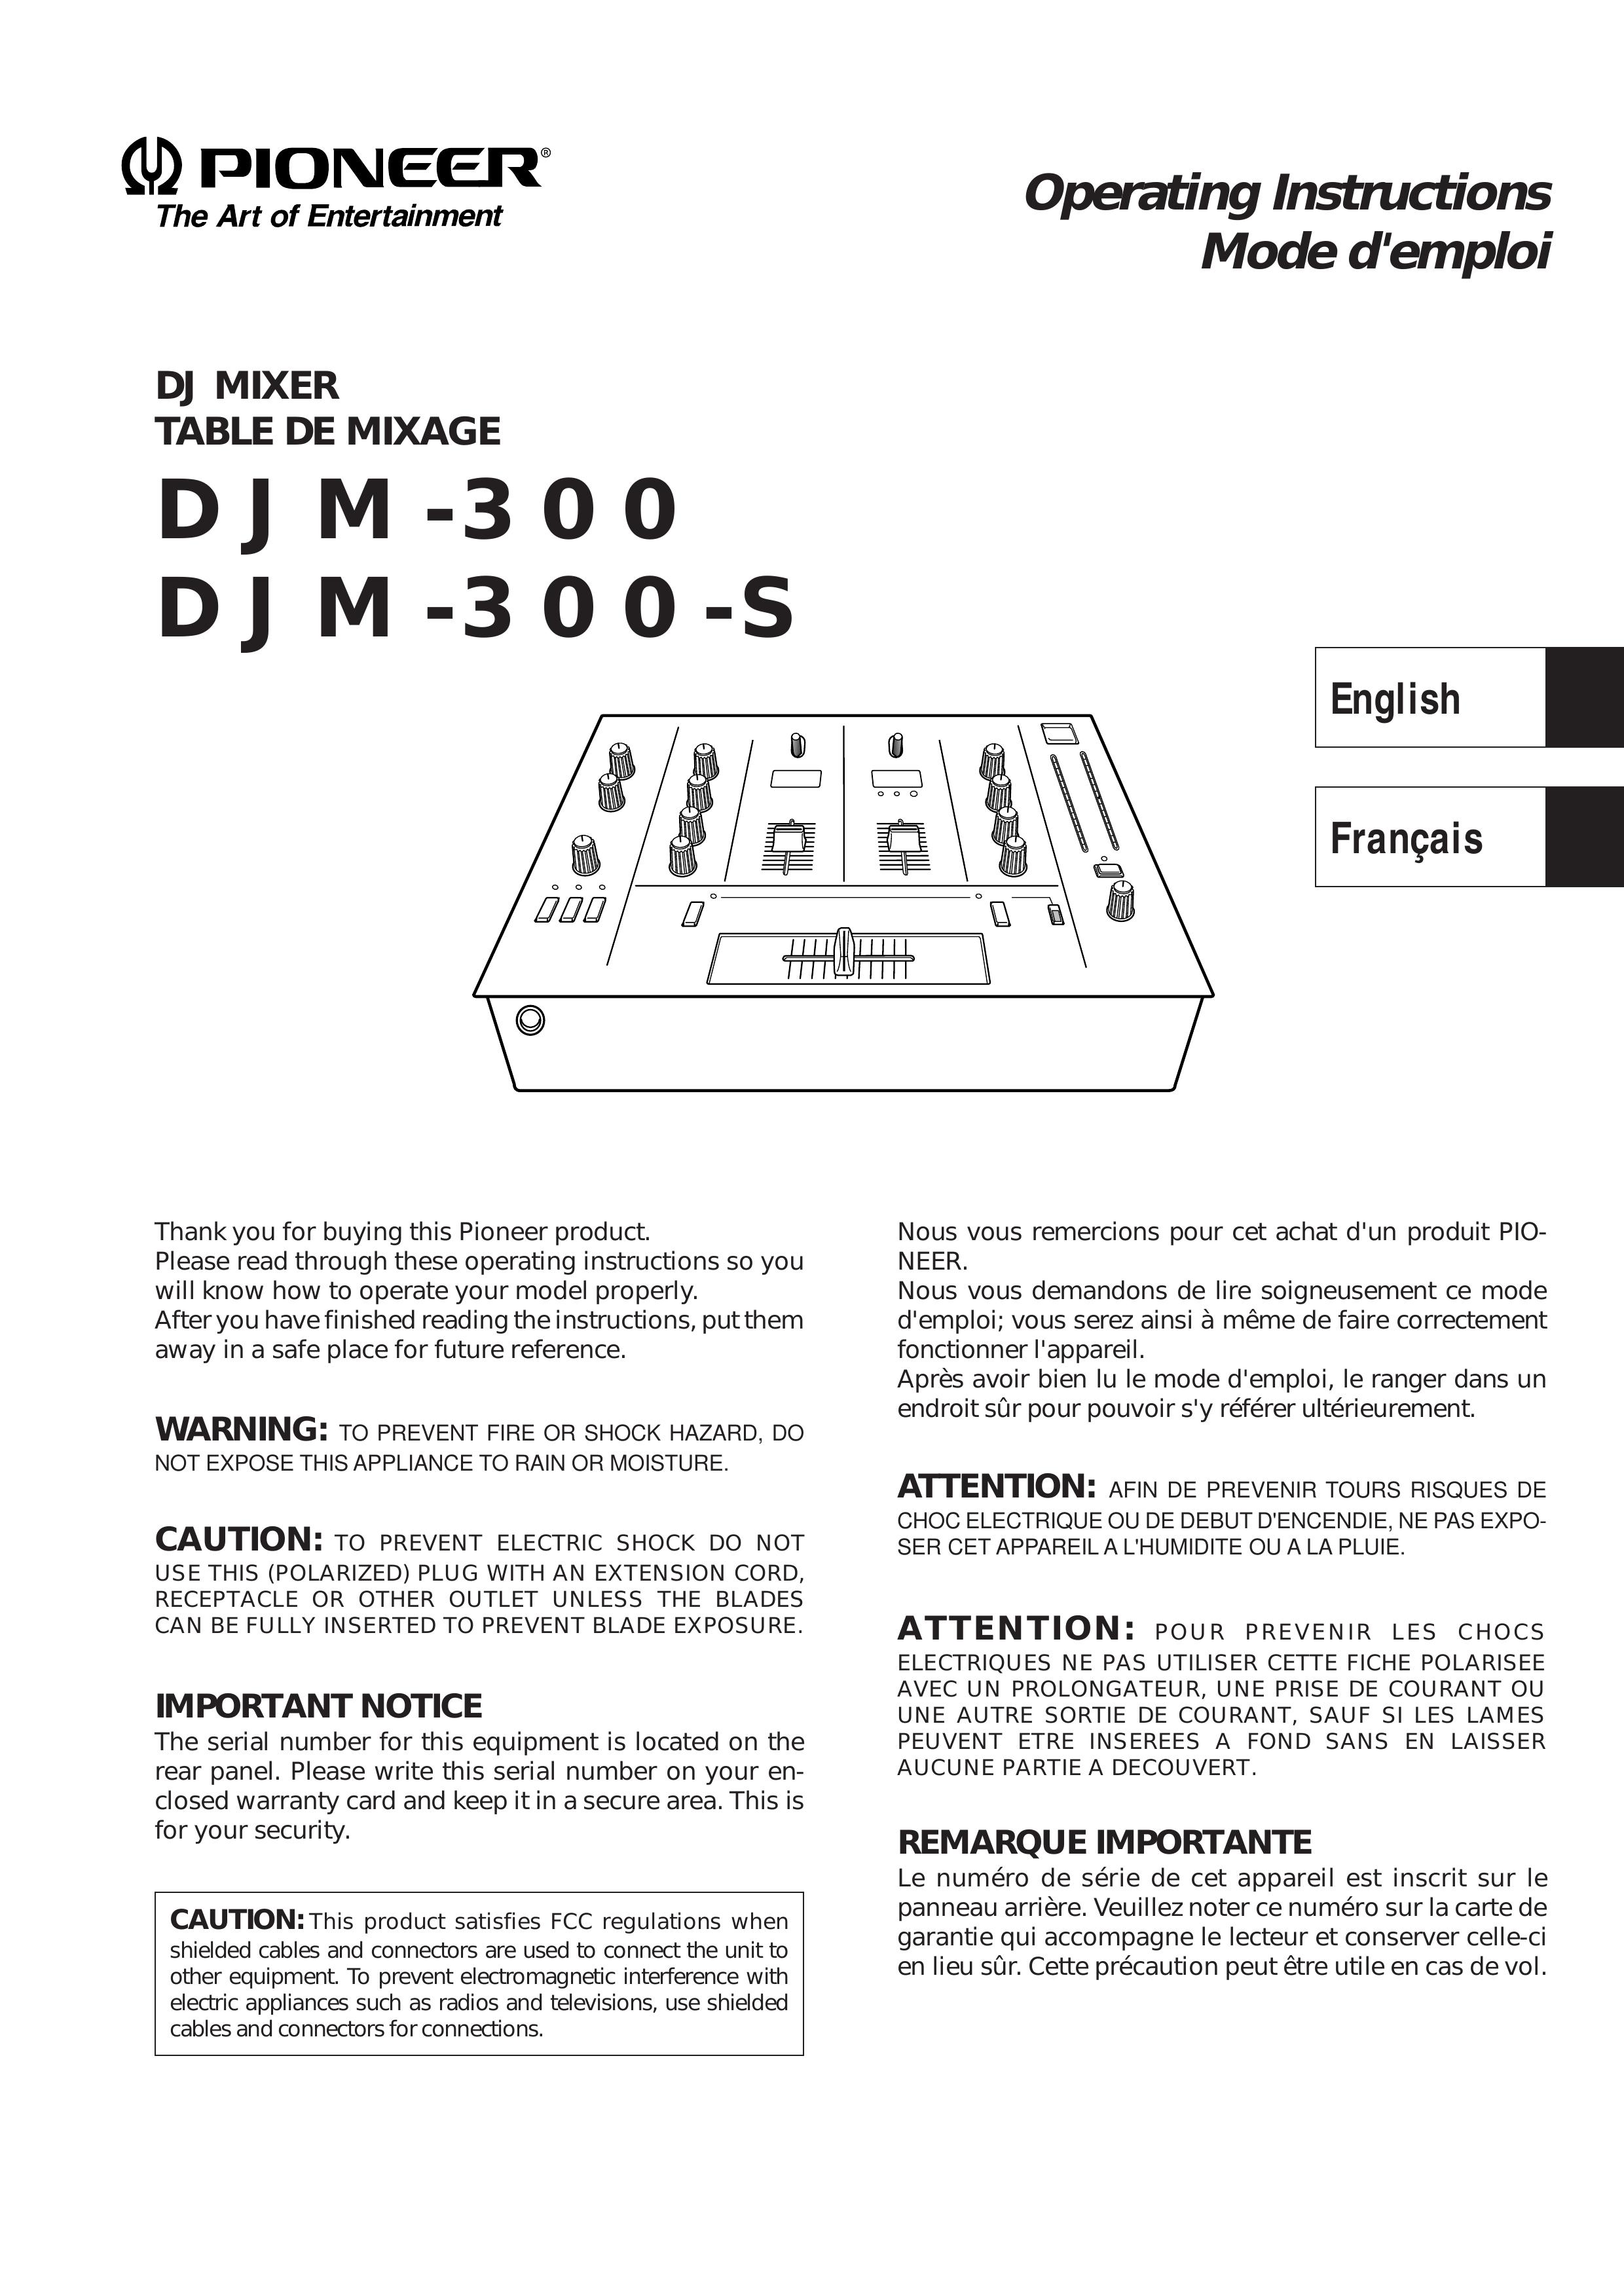 Pioneer 300 Musical Instrument User Manual